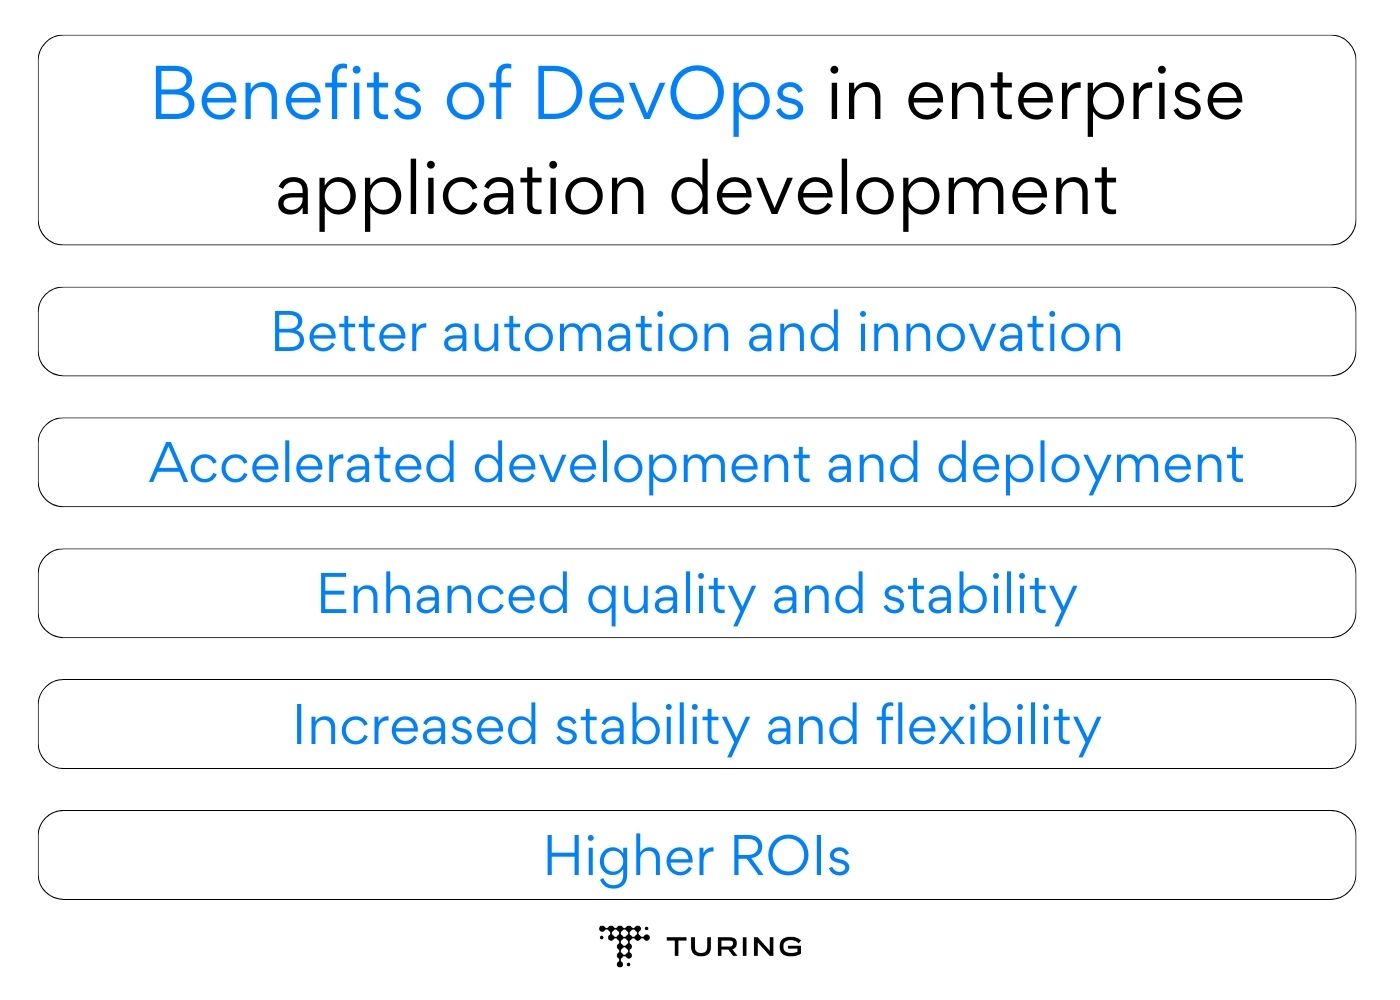 Benefits of DevOps in enterprise application development